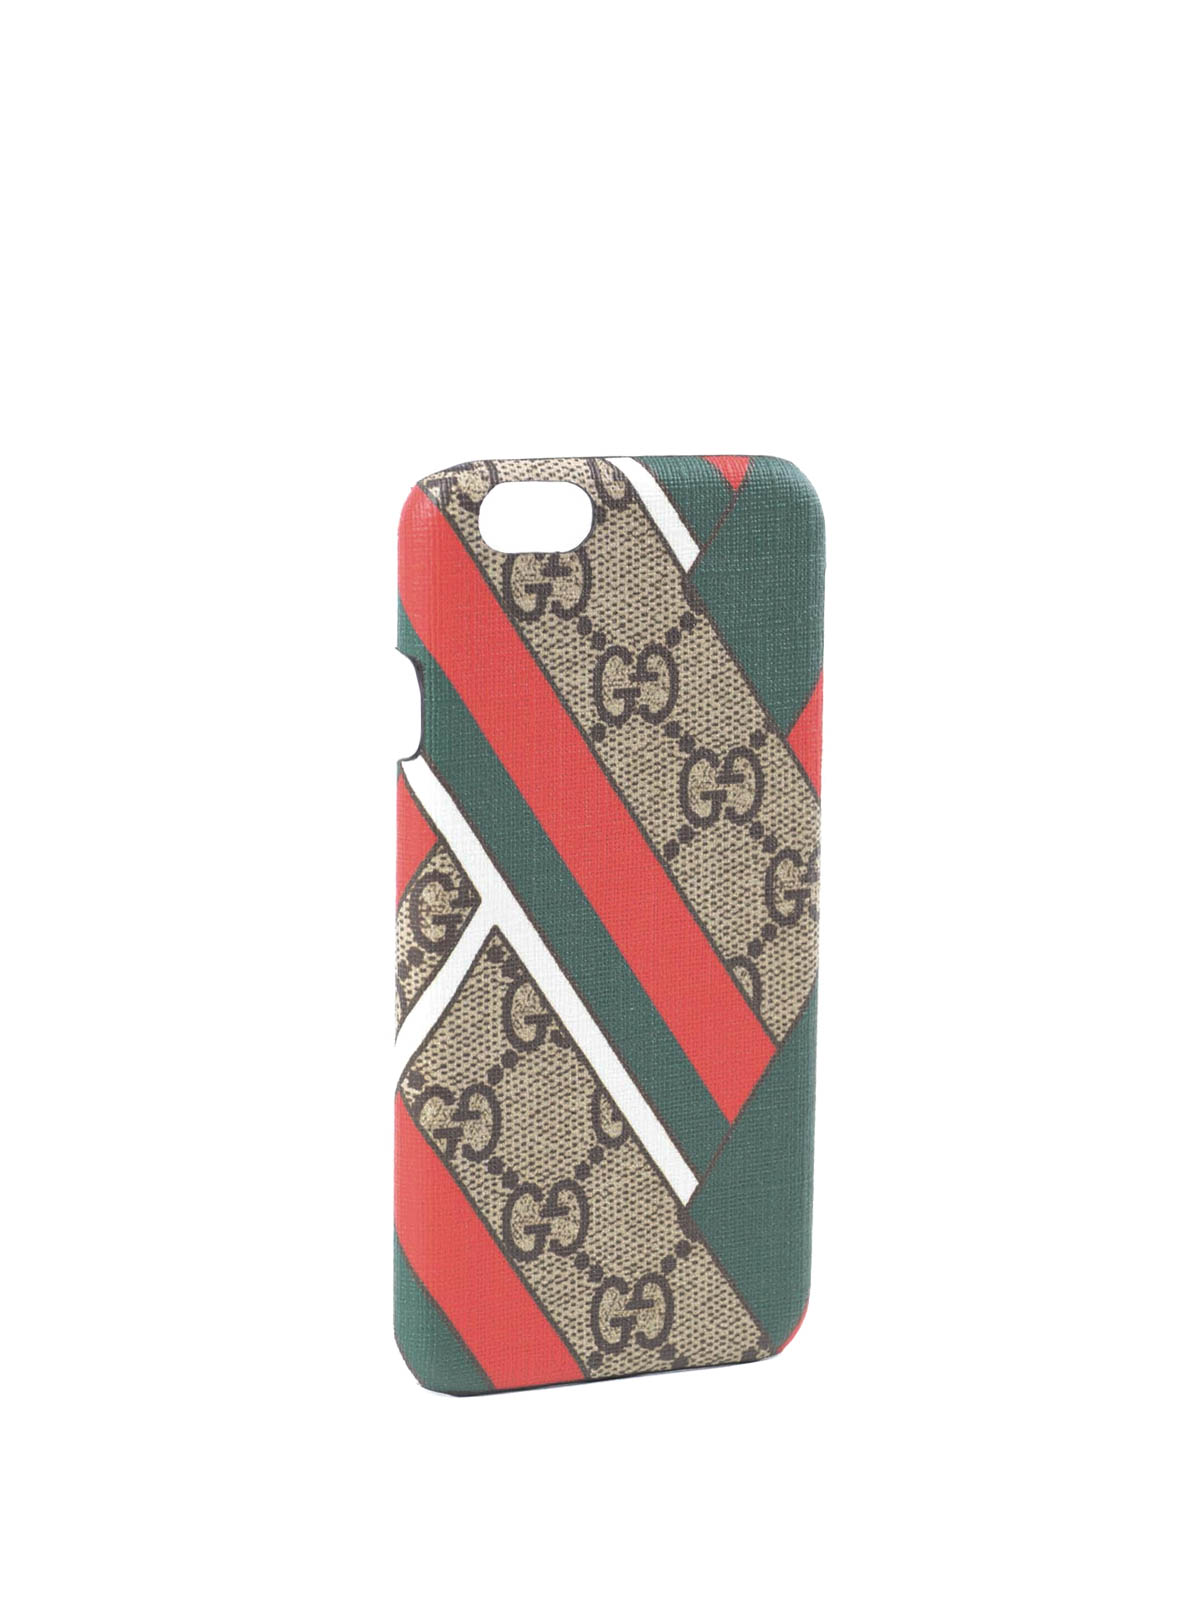 dekorere forfængelighed Er velkendte Cases & Covers Gucci - Chevron print iPhone 6 cover - 429237K1M008573